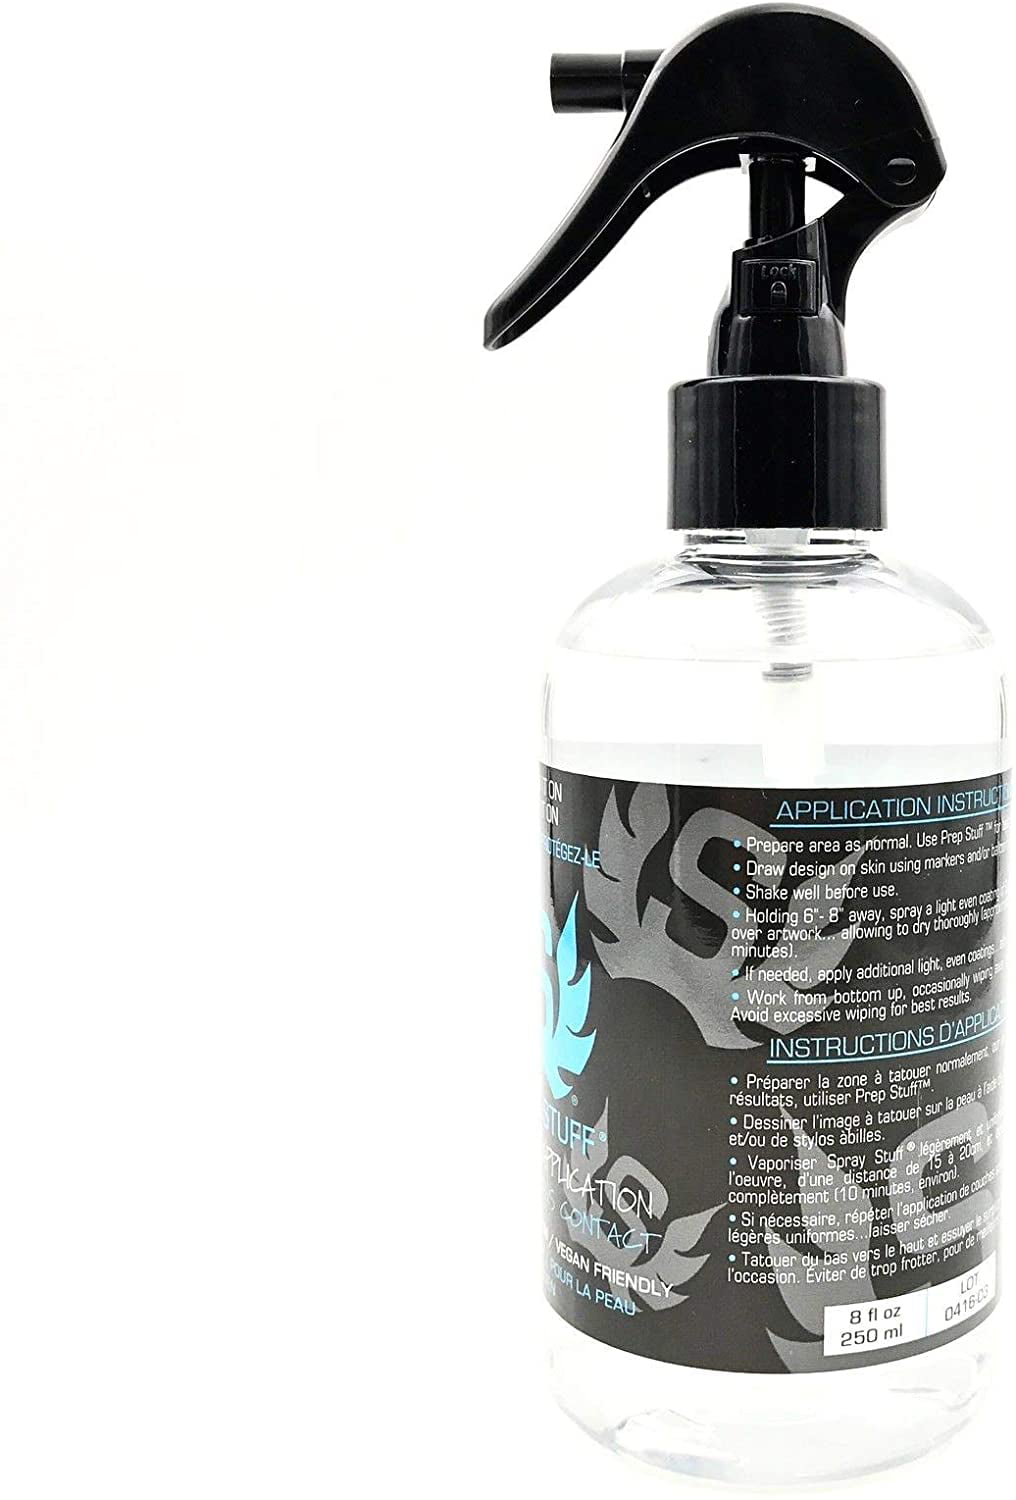 Spray Stuff - Obsidian Tattoo Supply